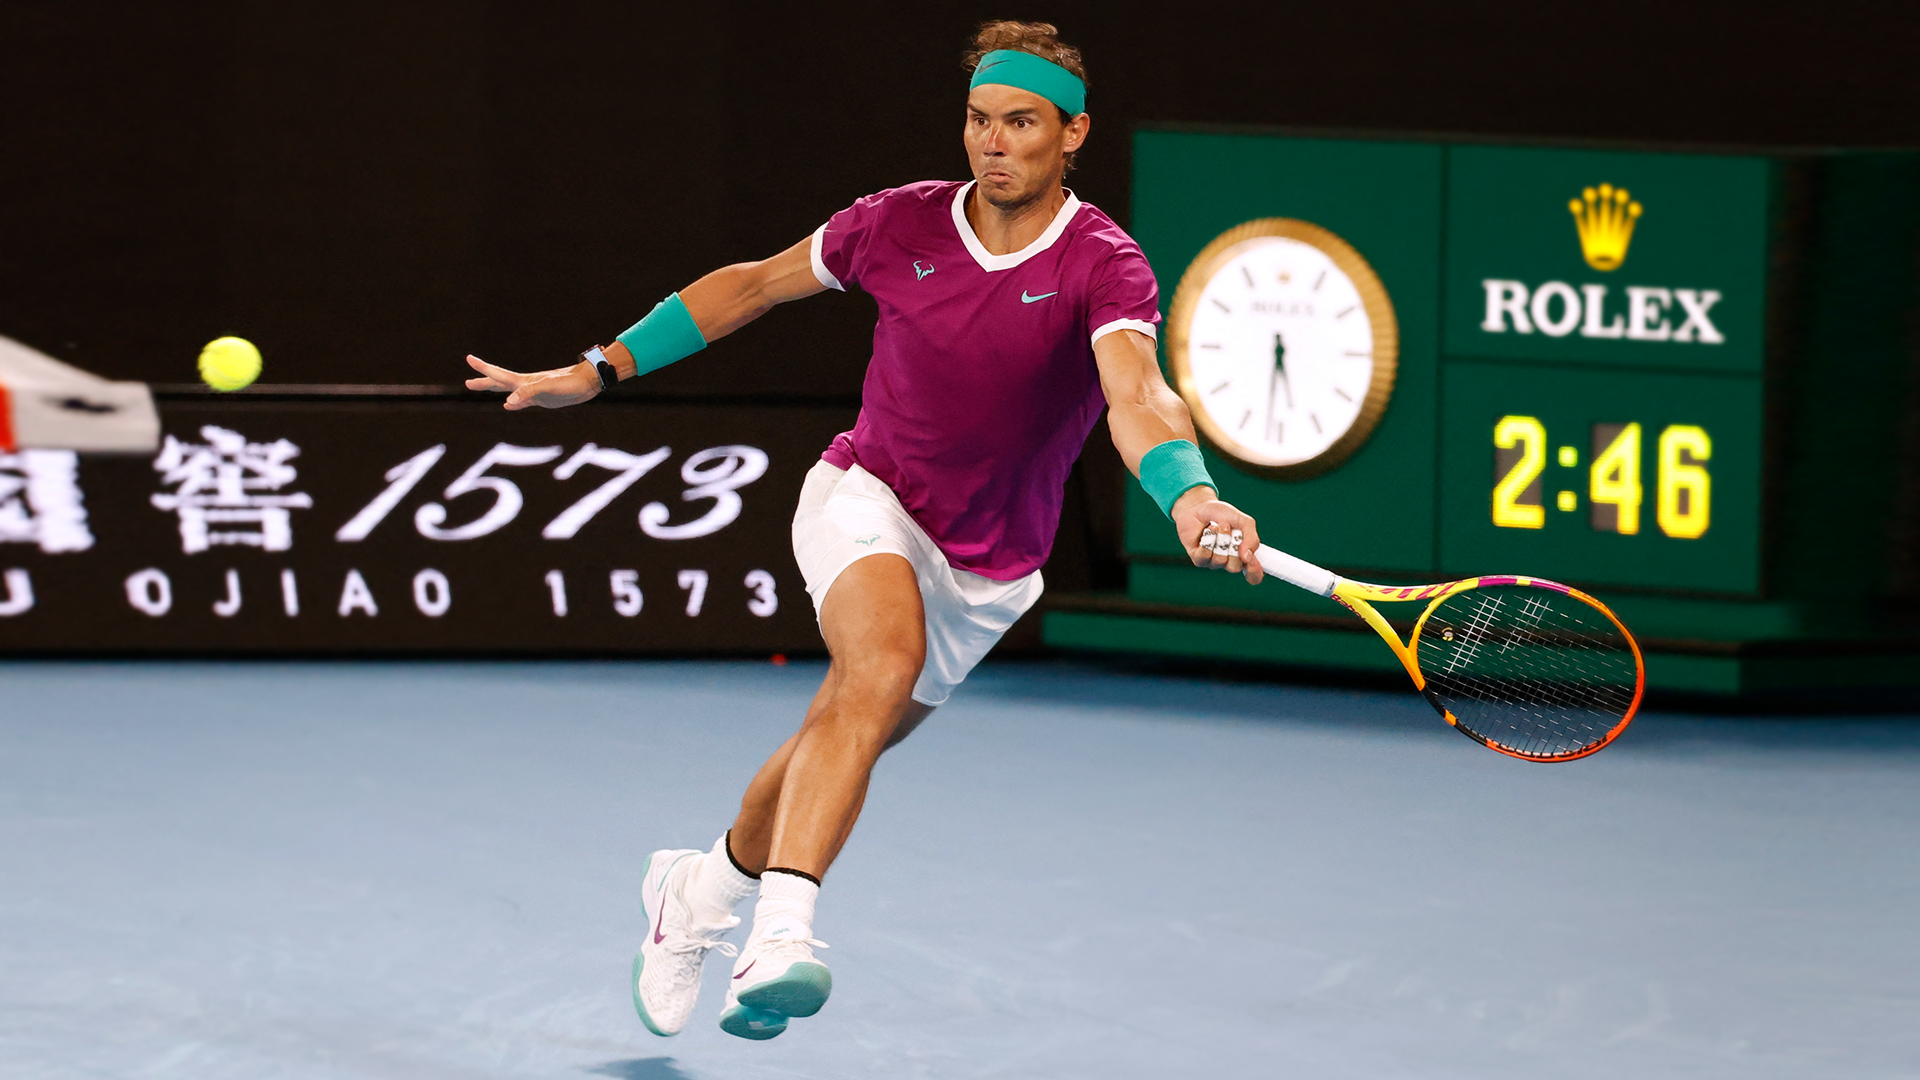 Australian Open: Nadal reaches final, upsets Berrettini 4-1 in semis